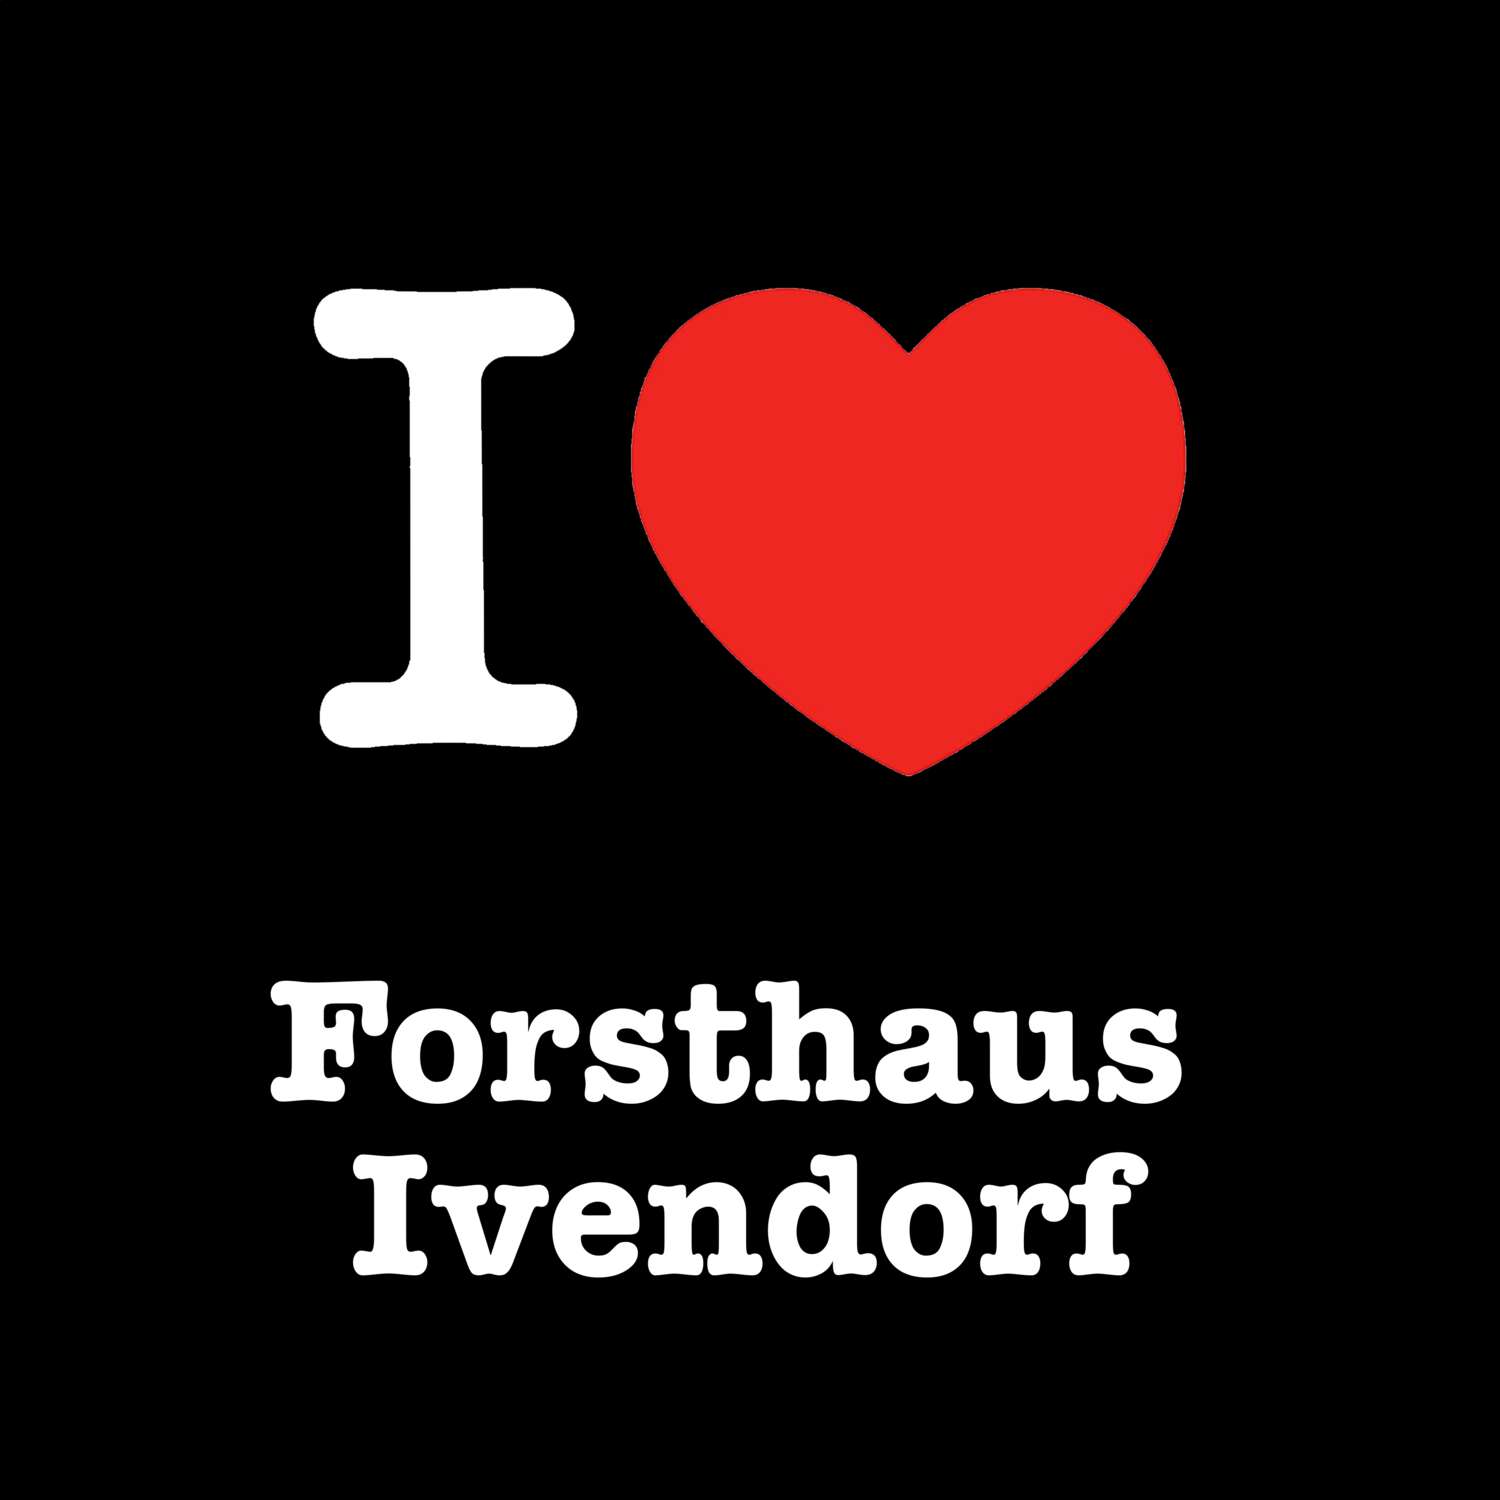 Forsthaus Ivendorf T-Shirt »I love«